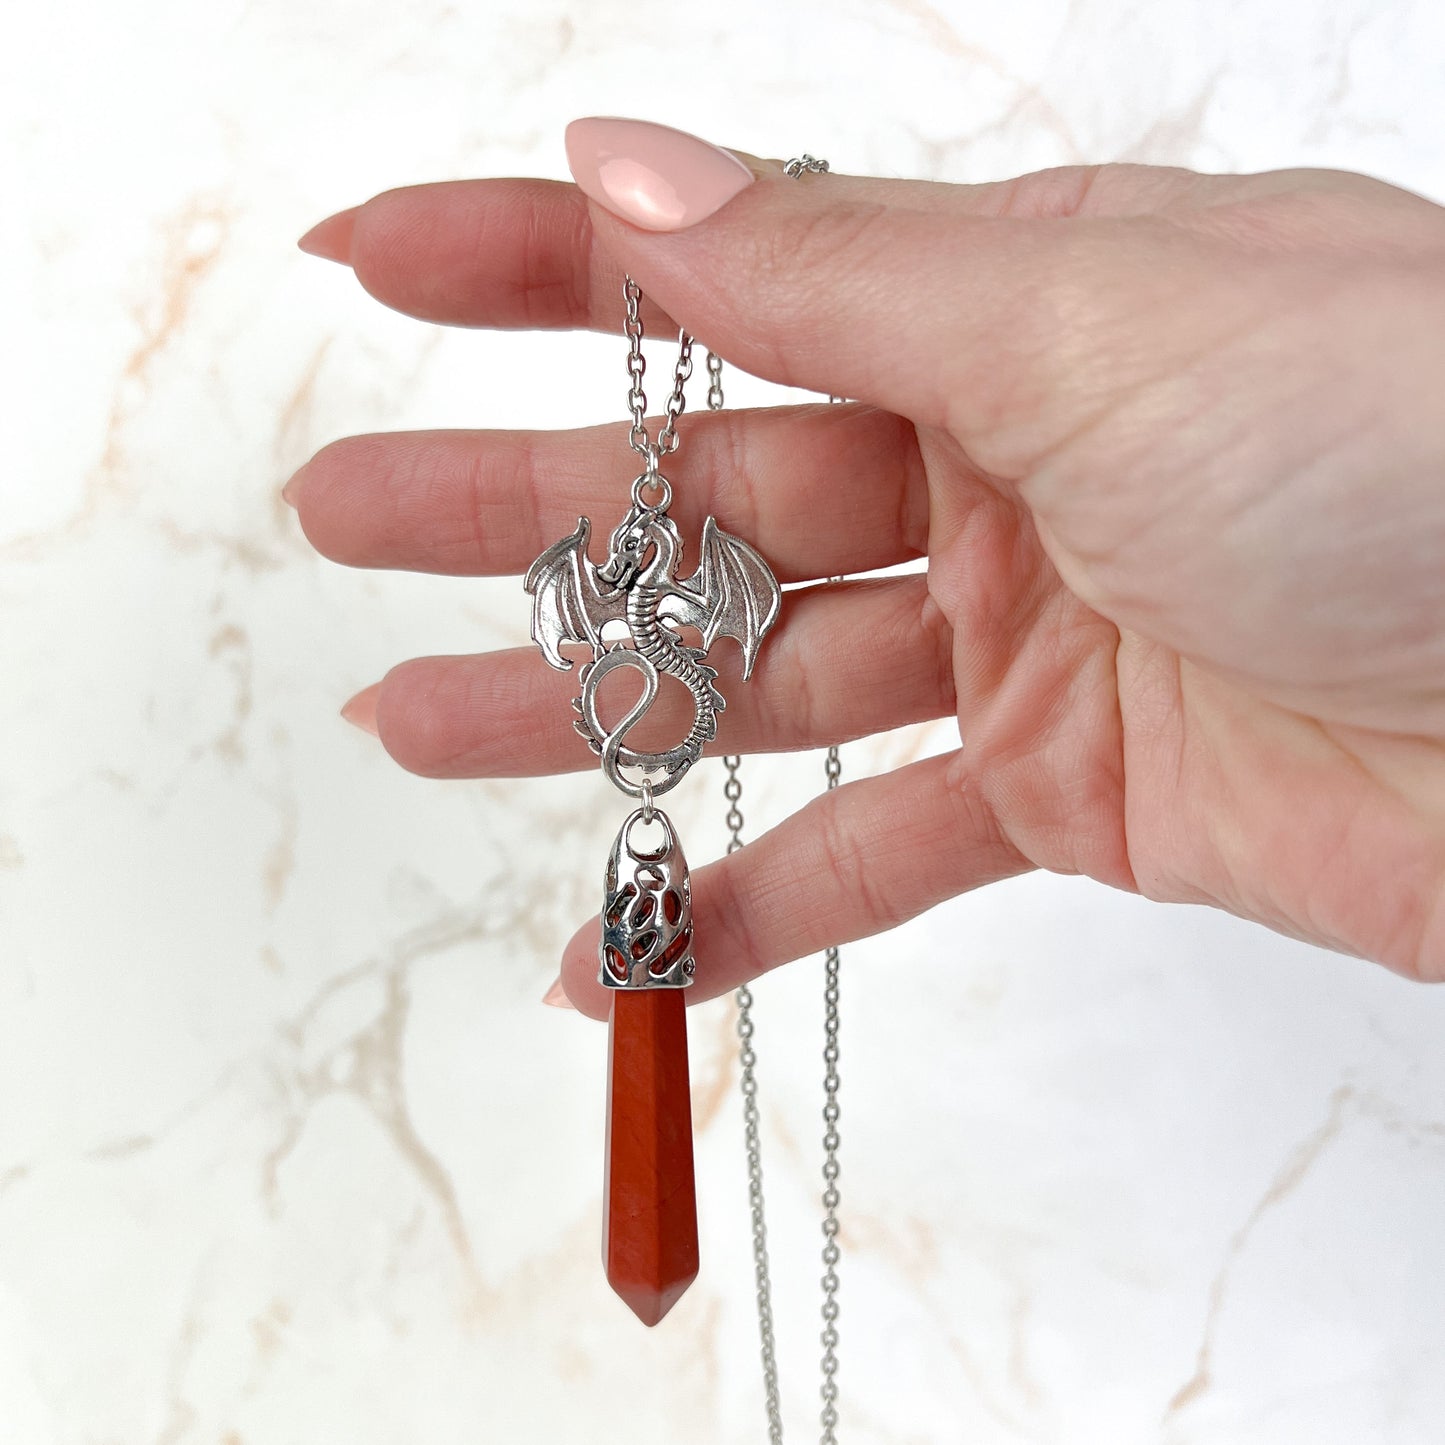 Red jasper and dragon divination pendulum necklace Baguette Magick